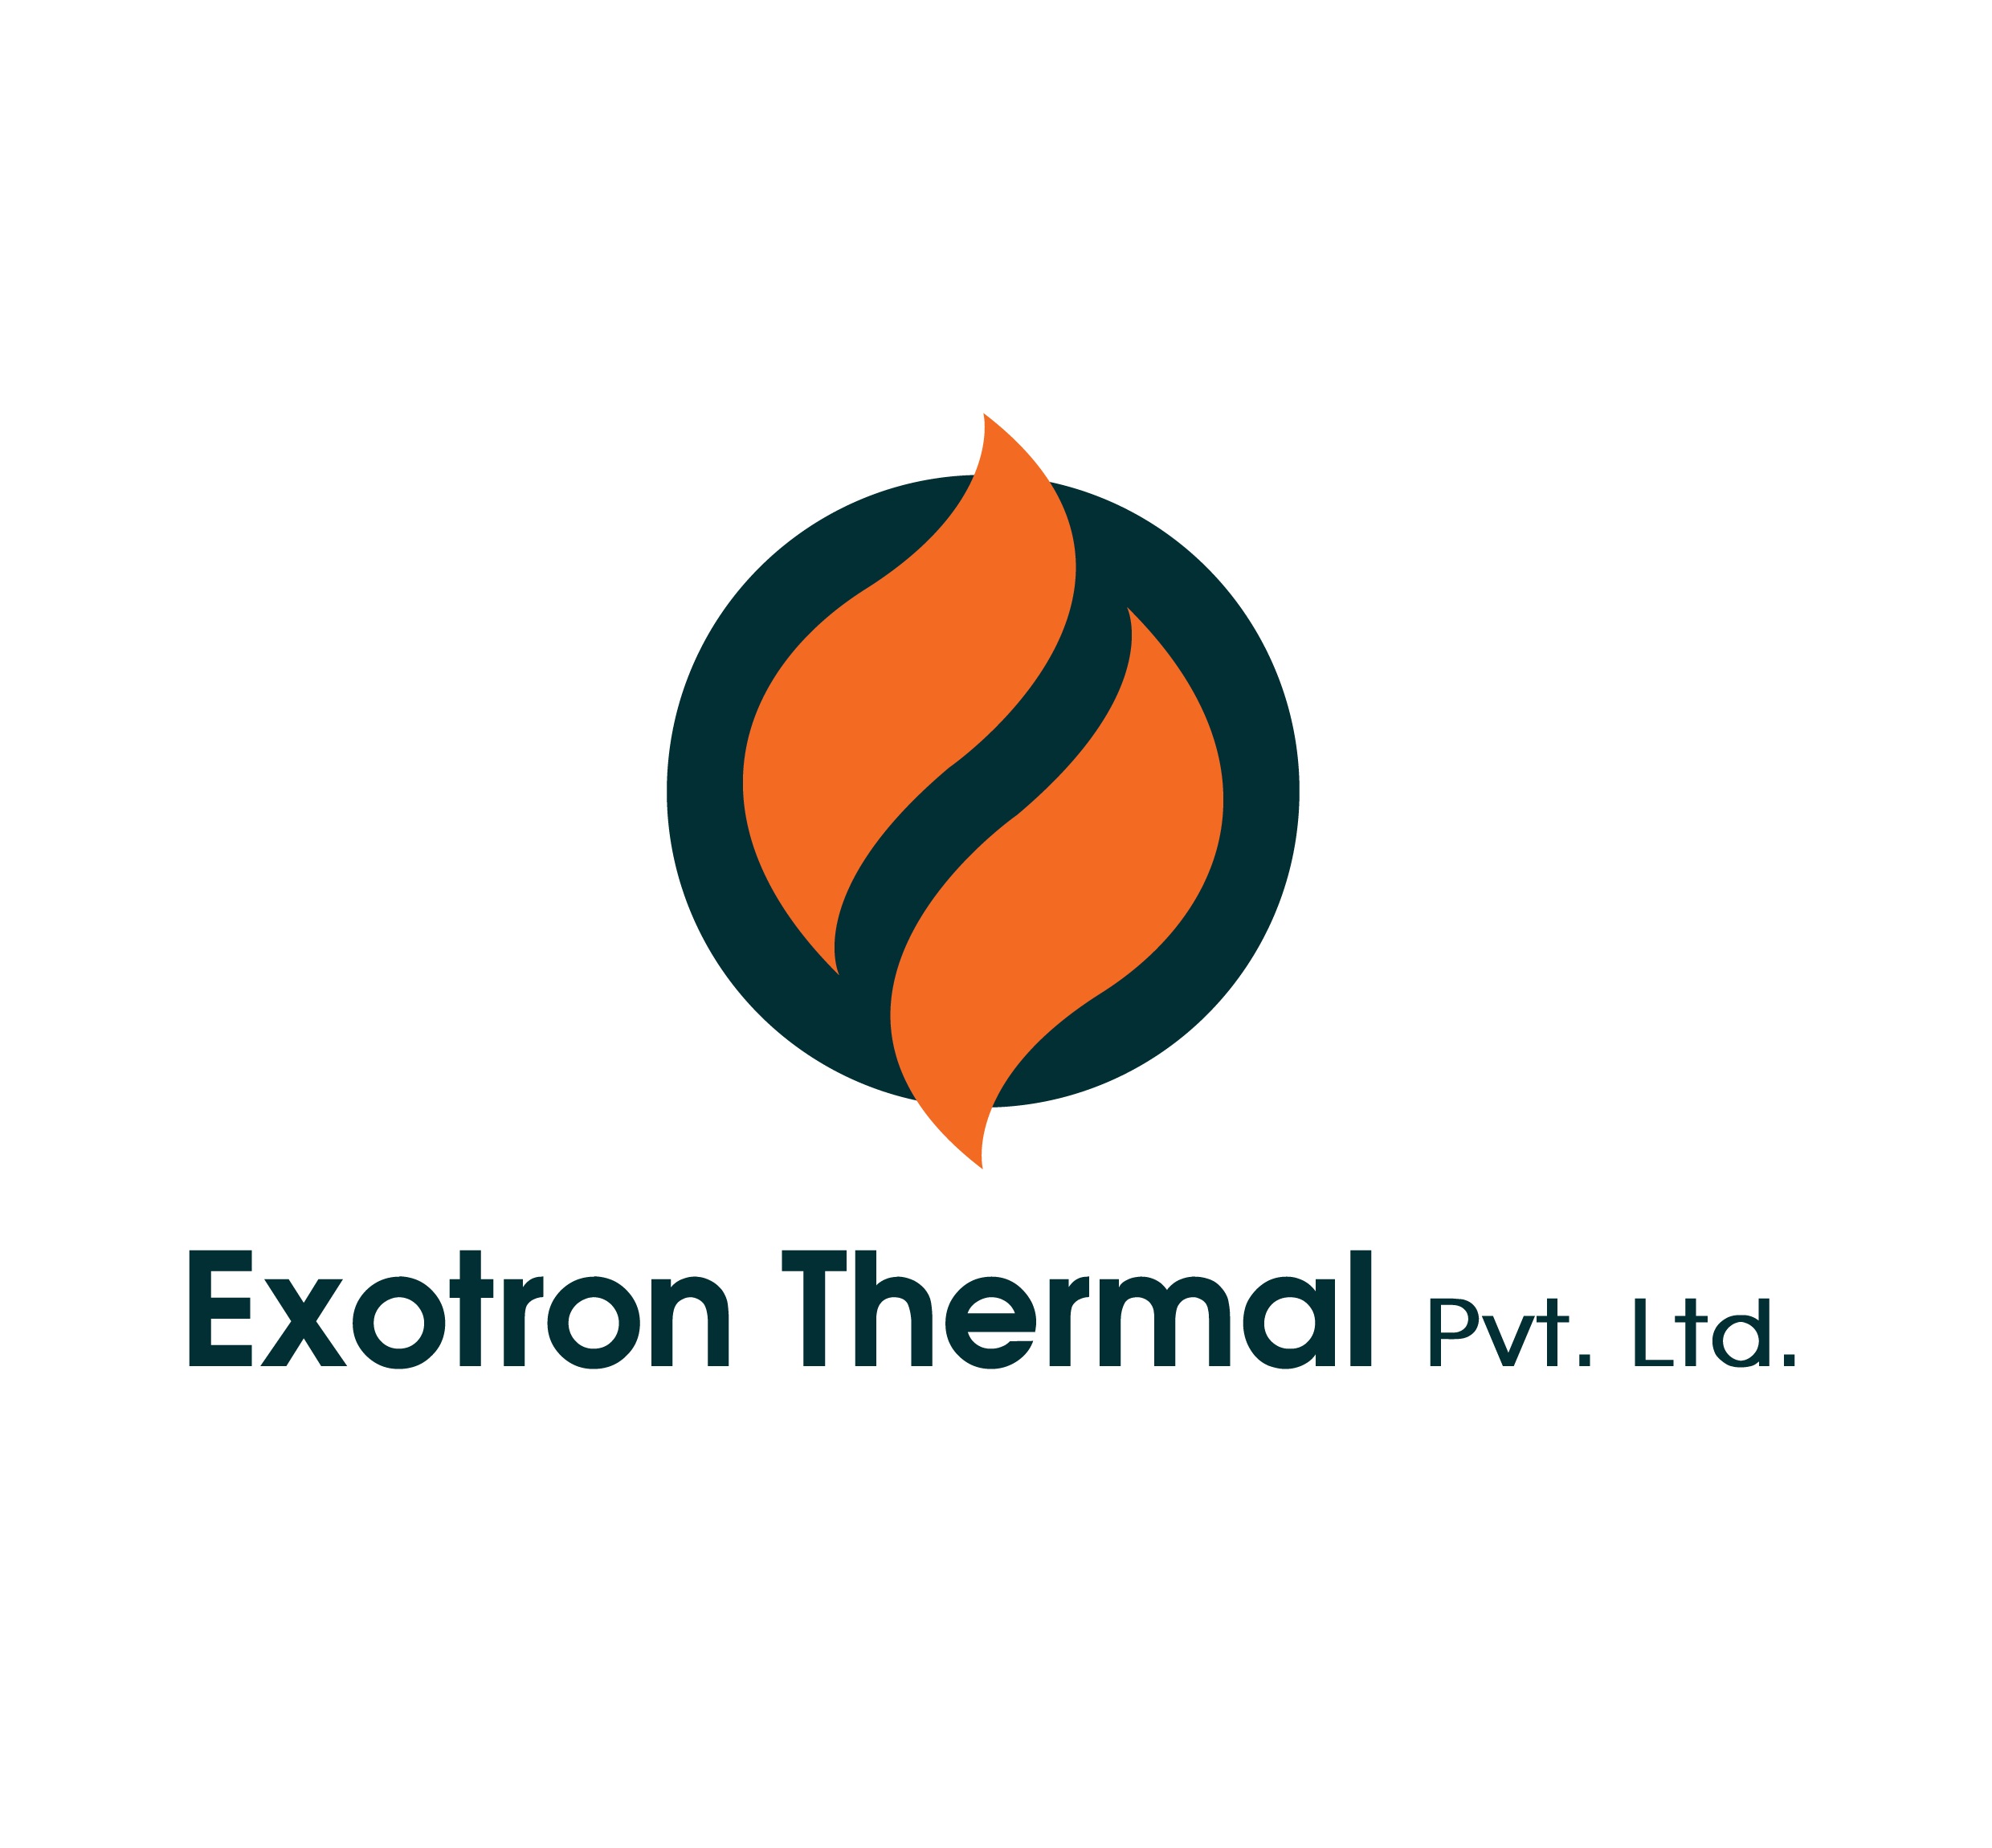 Exotron Thermal Pvt. Ltd